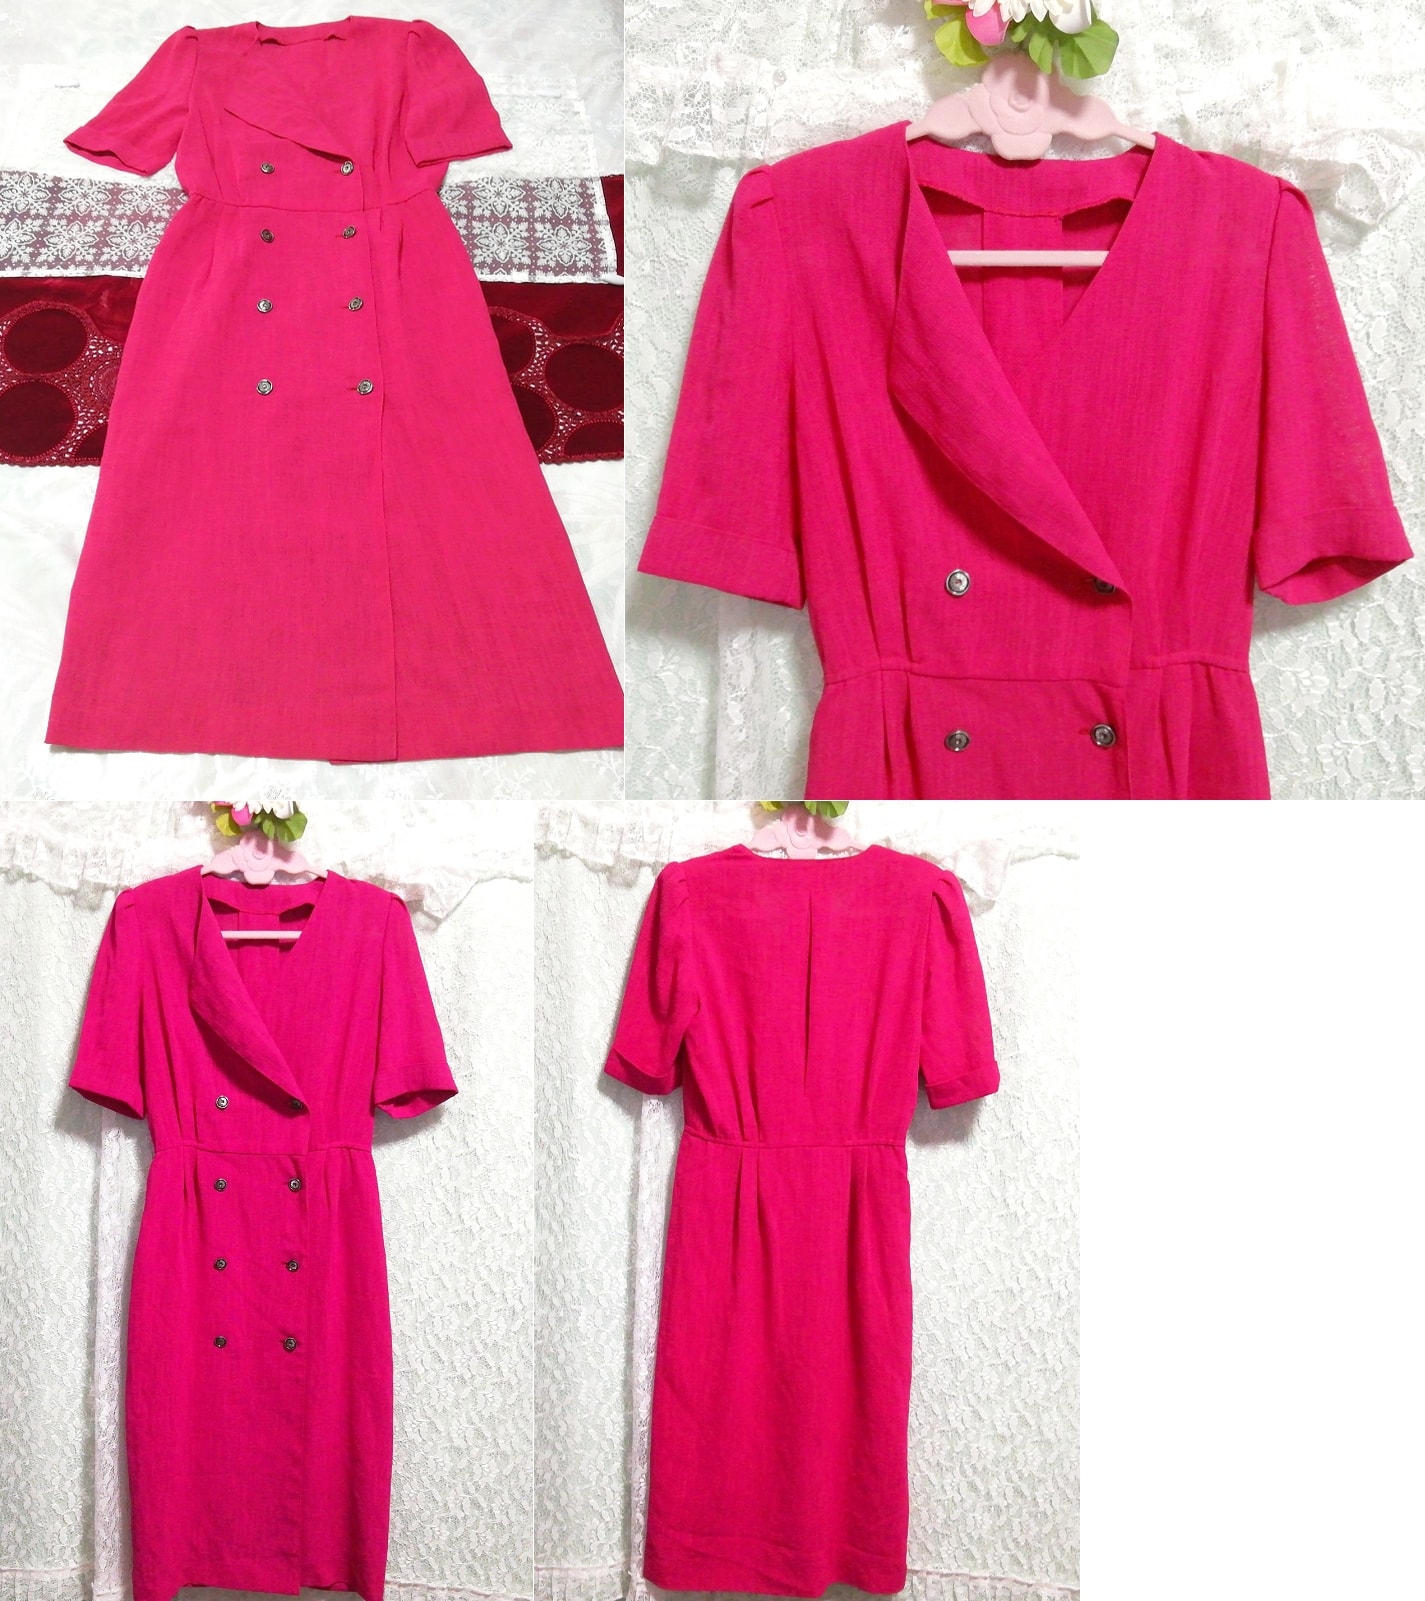 Vestido camisón negligee cardigan haori rojo rosa magenta, sayo, manga corta, talla m